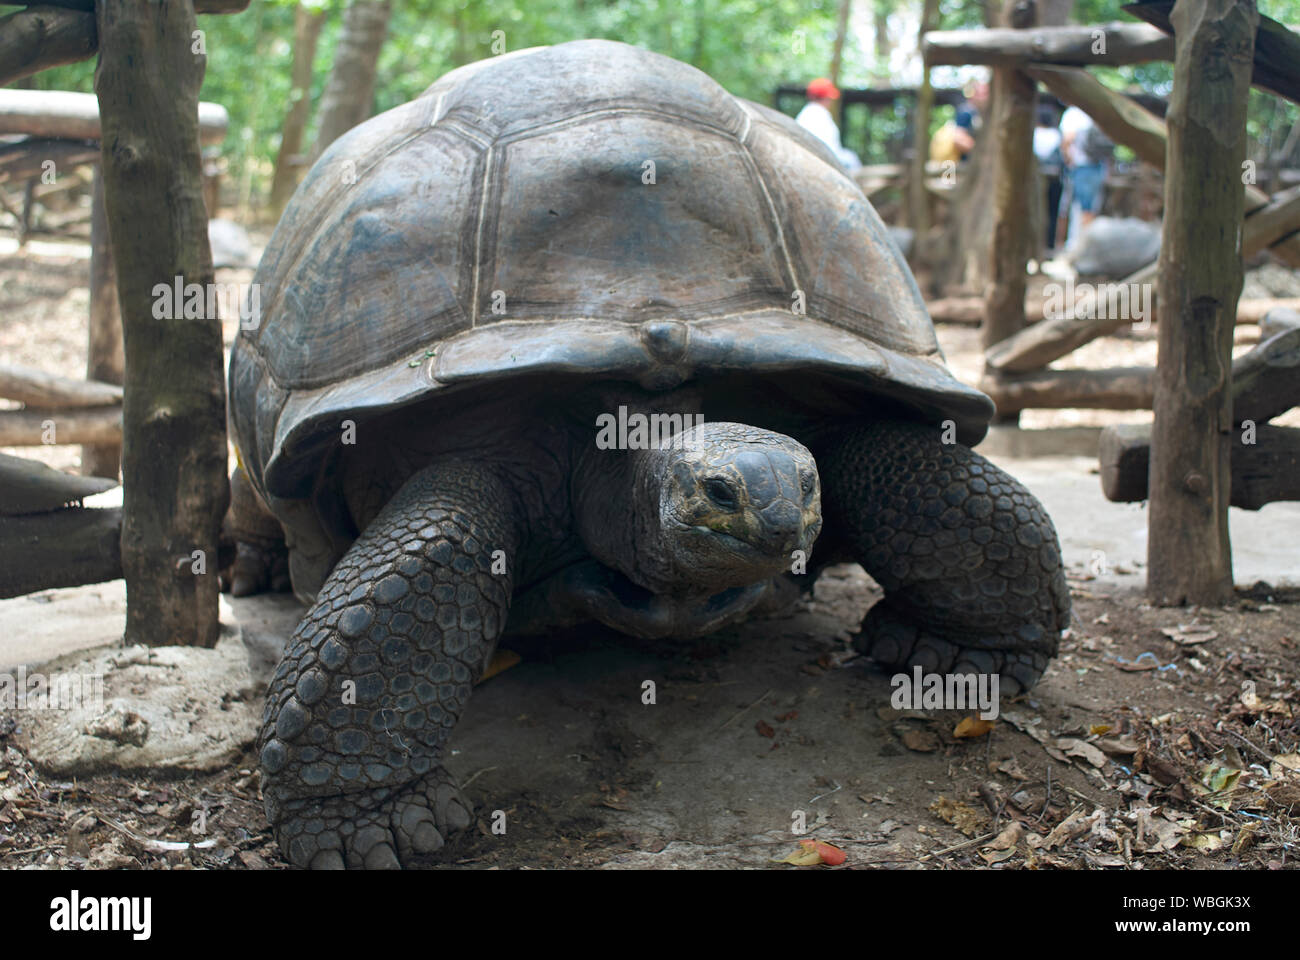 Giant Aldabra tortoiseson Prison Island (Zanzibar), which originated 1919 from the Seychelles Stock Photo